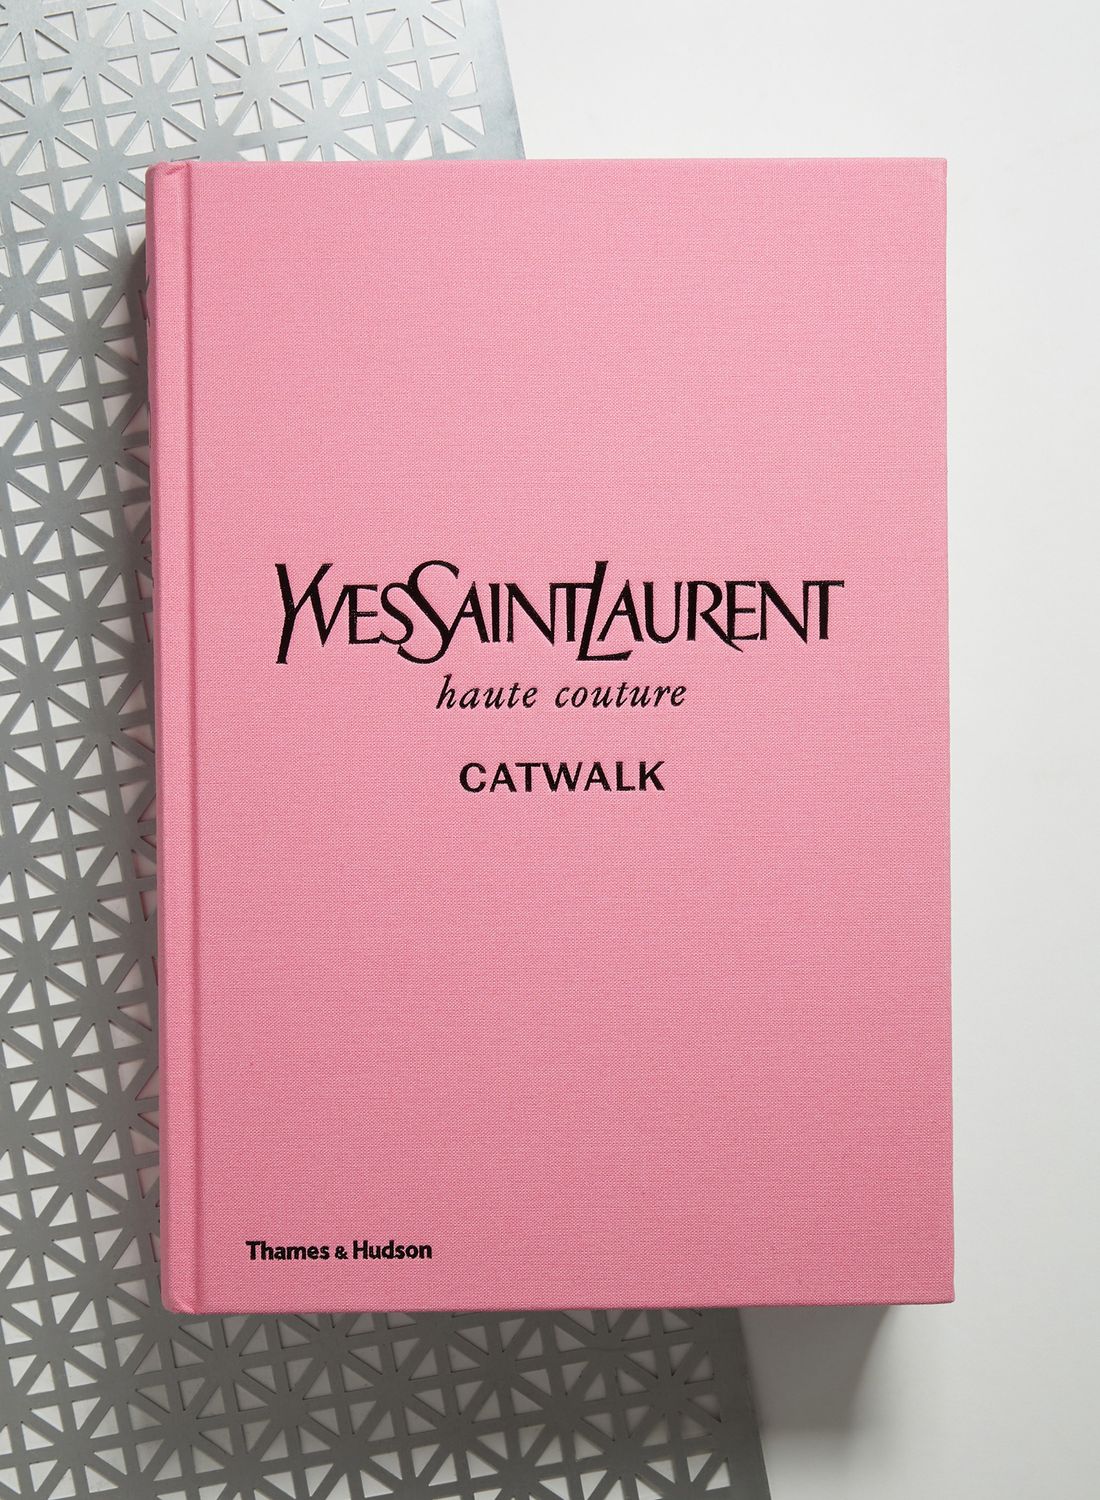 yves saint laurent catwalk book